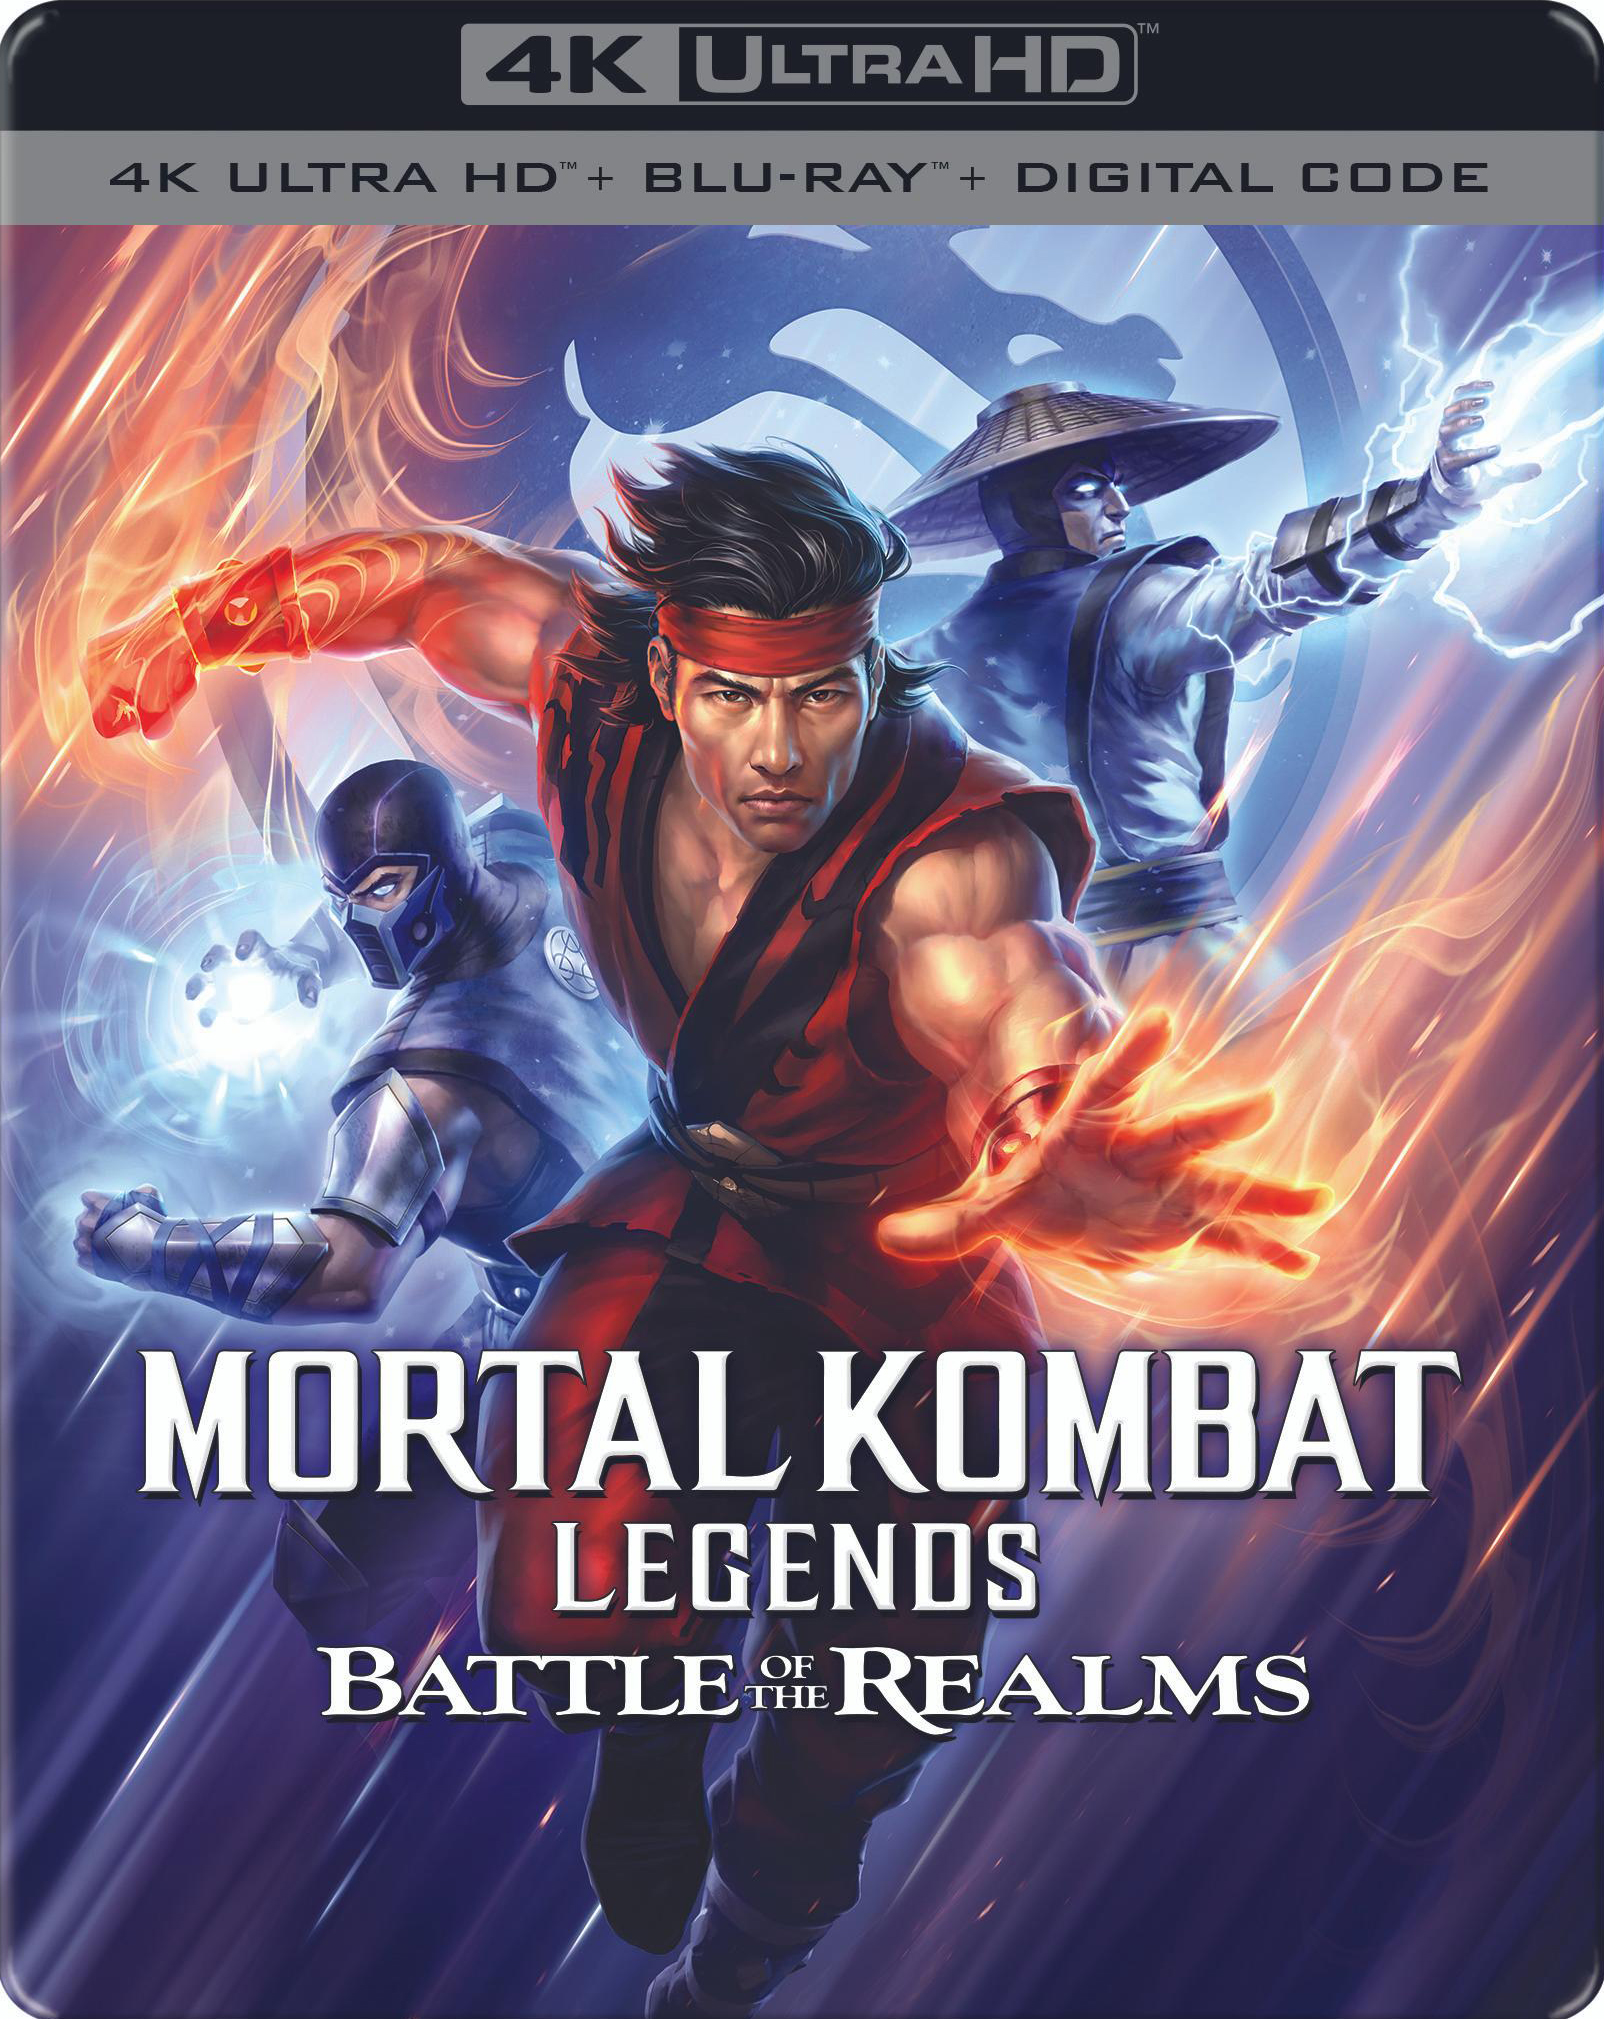 Mortal Kombat Legends: Snow Blind 4K Ultra HD and Blu-ray release